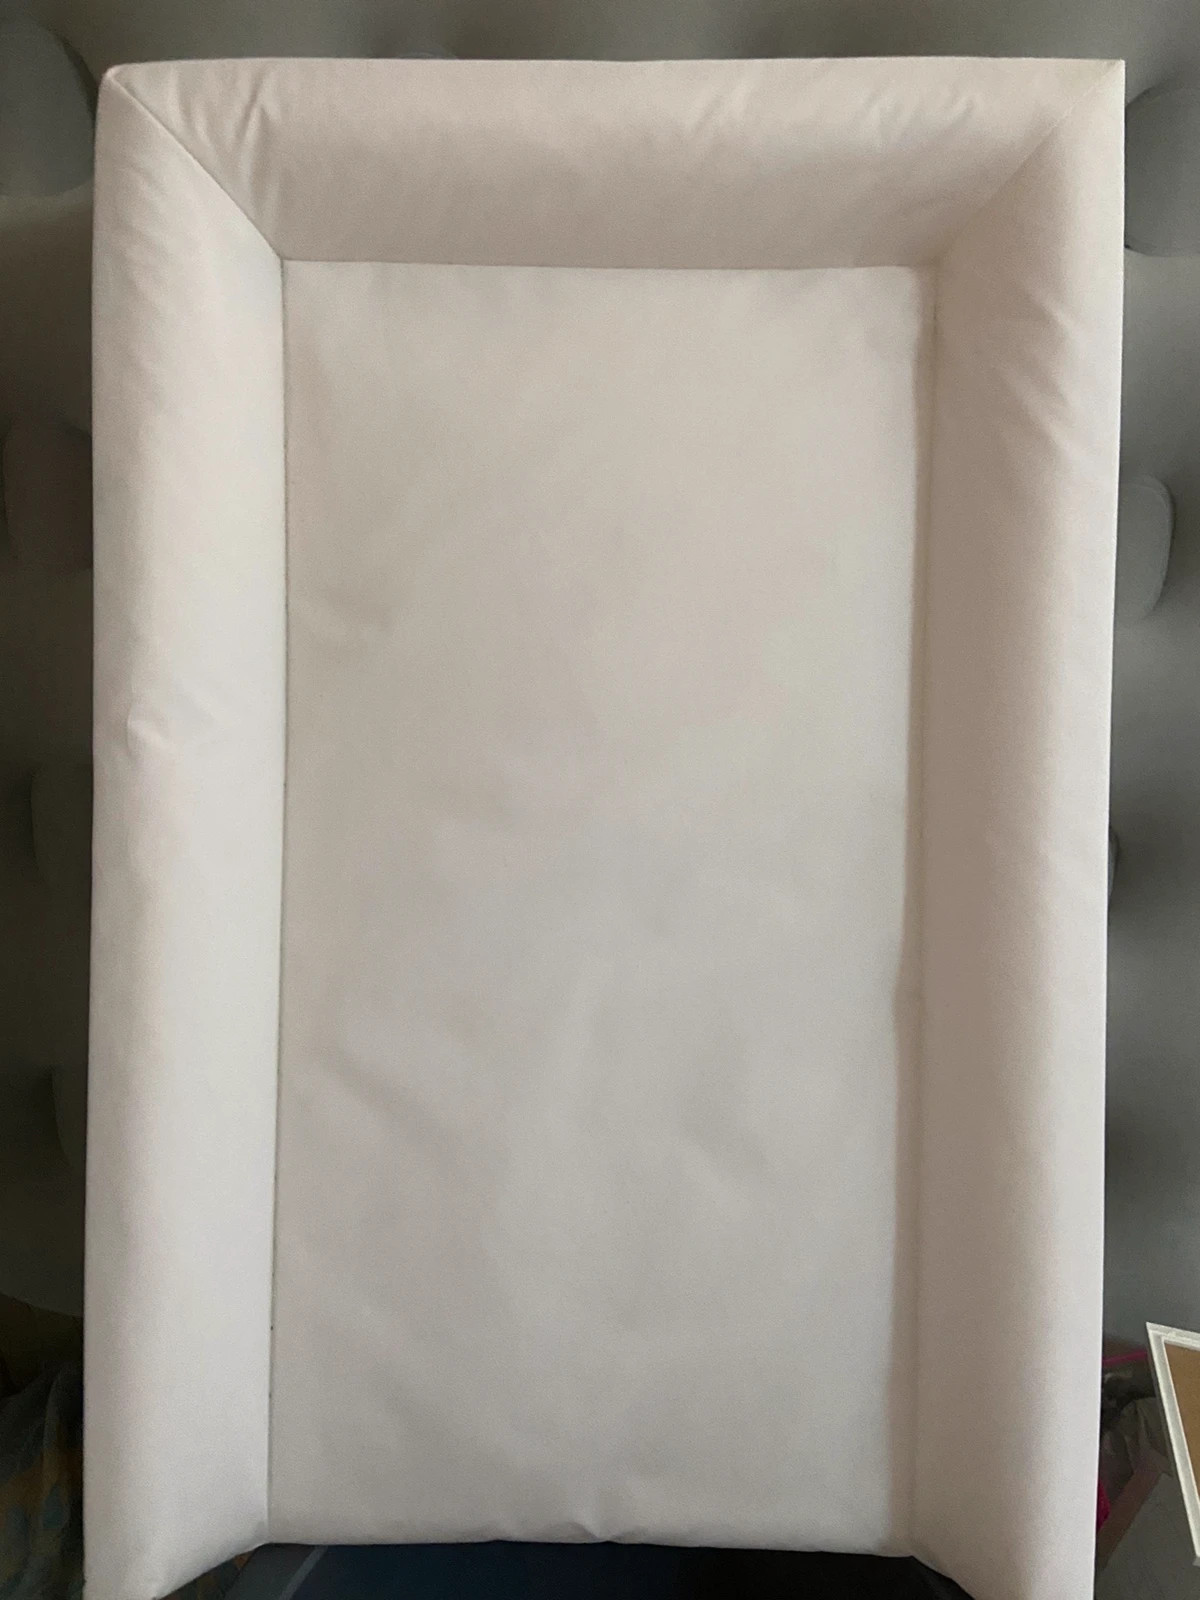 VÄDRA capa p/muda-fraldas, branco, 48x74 cm - IKEA